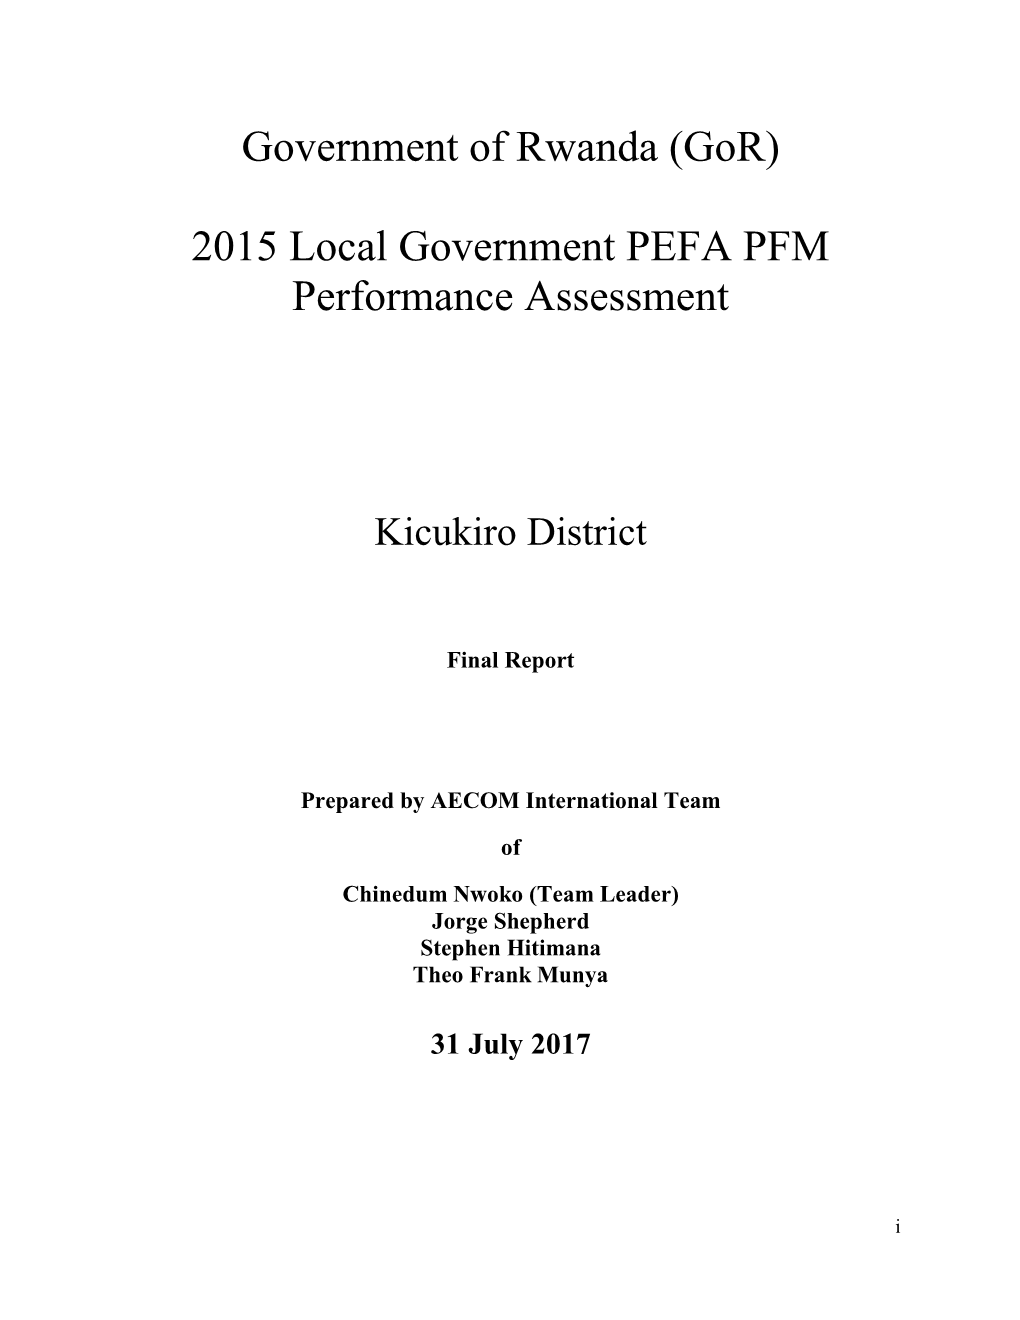 Government of Rwanda (Gor) 2015 Local Government PEFA PFM